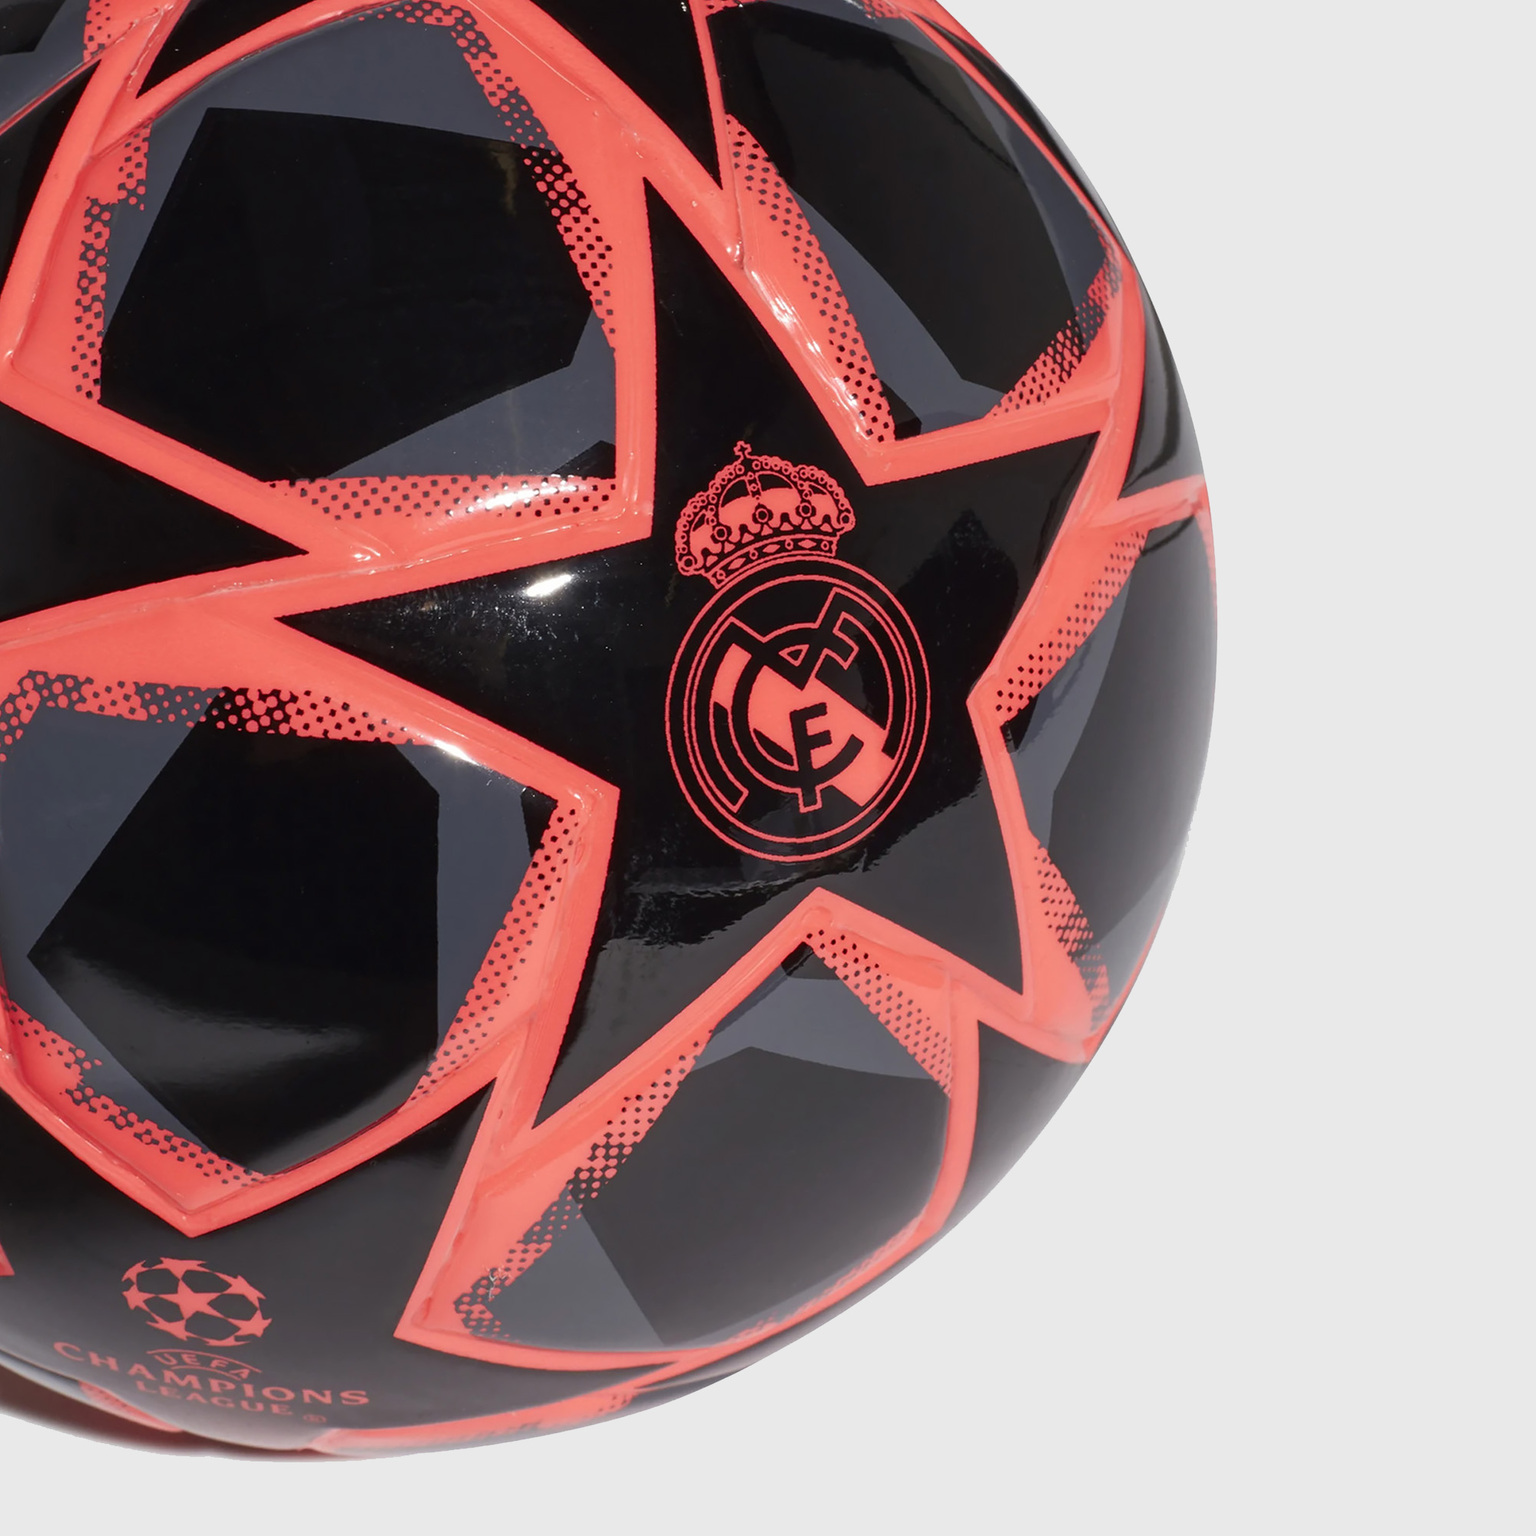 Мяч сувенирный Adidas Real Madrid mini FS0268